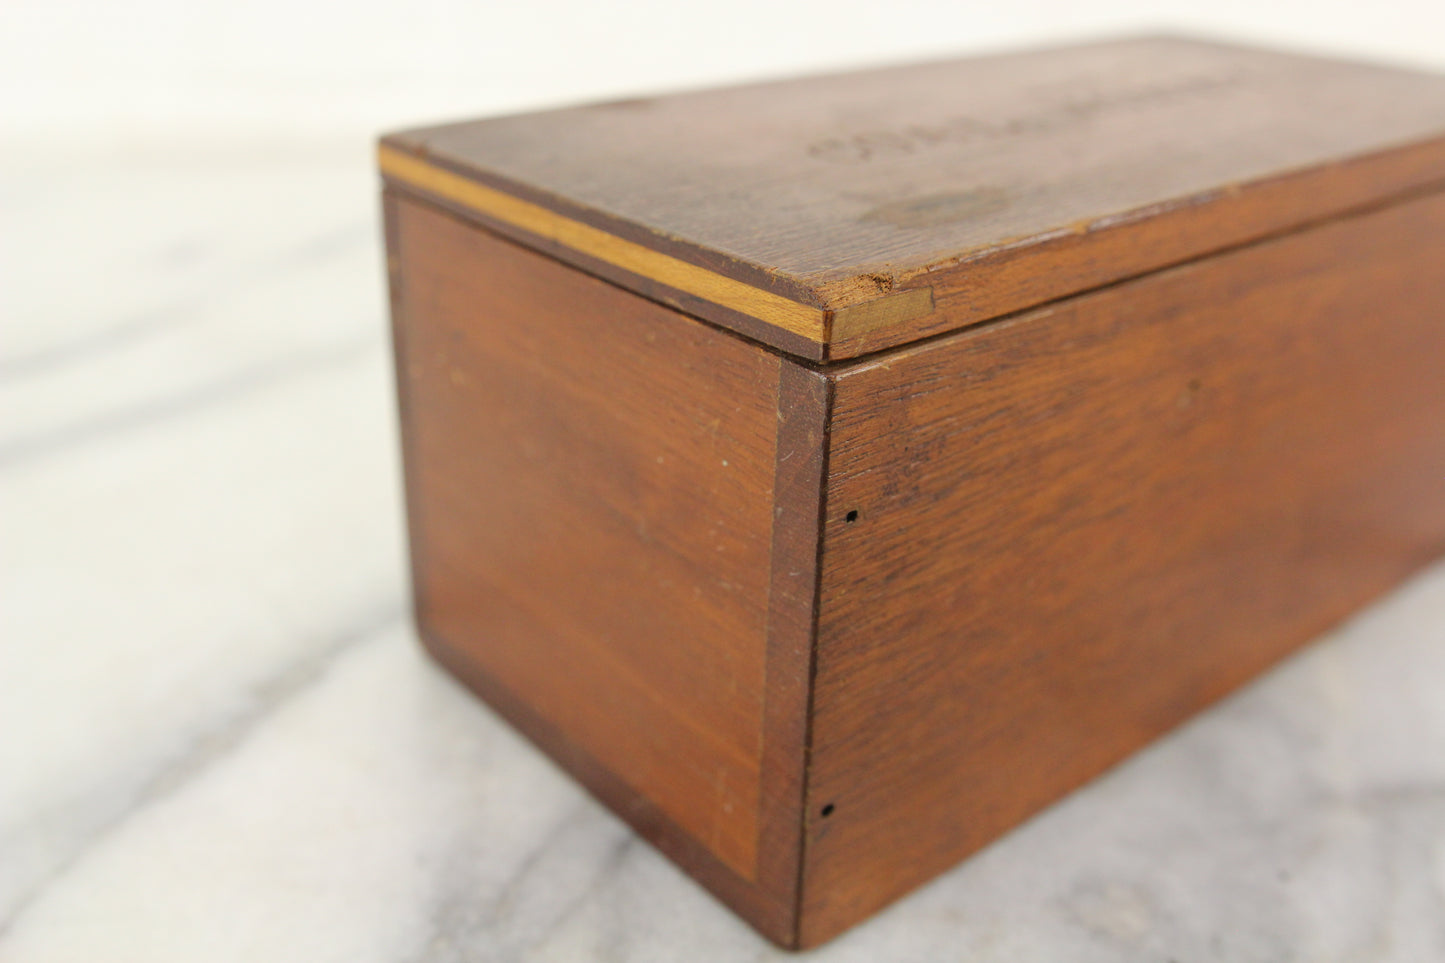 Wooden "Coal Money" Storage Box with Inlay - 7 x 3.5 x 3"